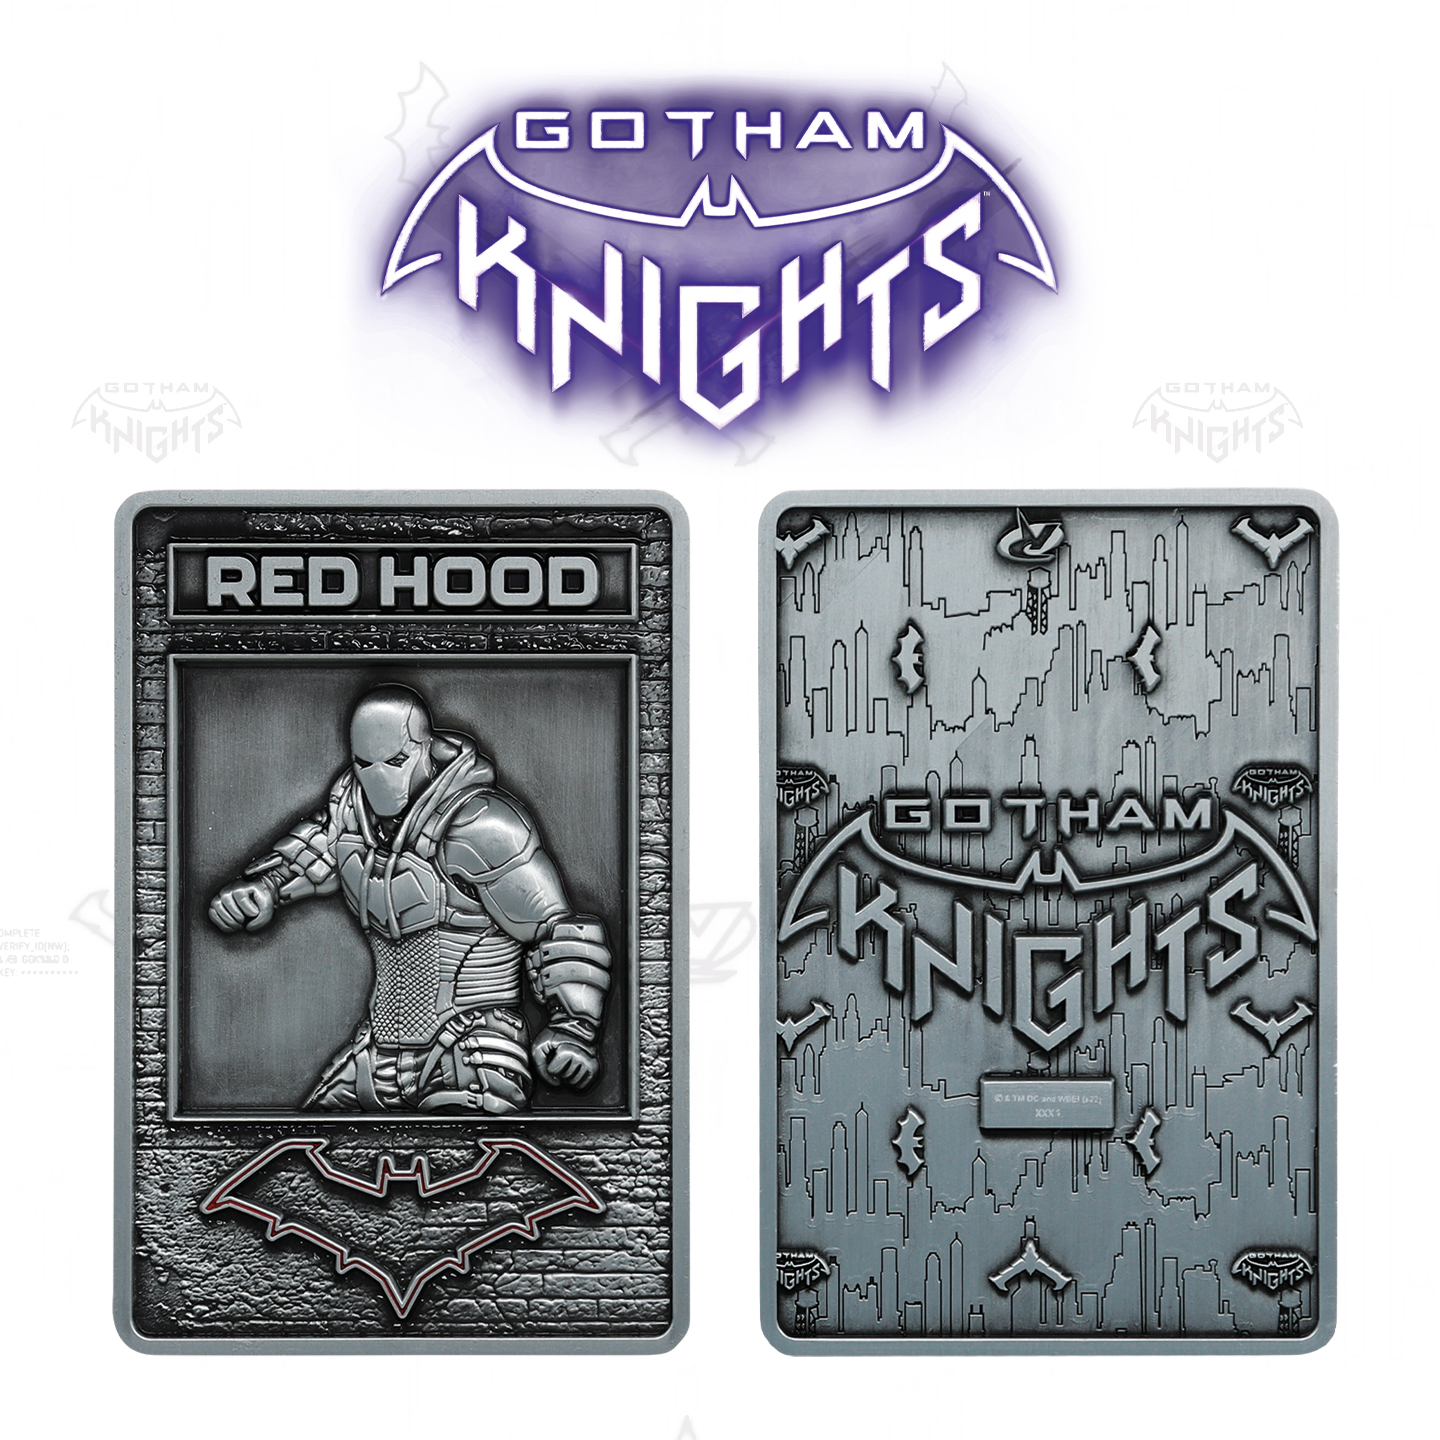 Gotham Knights Limited edition ingot : Red Hood